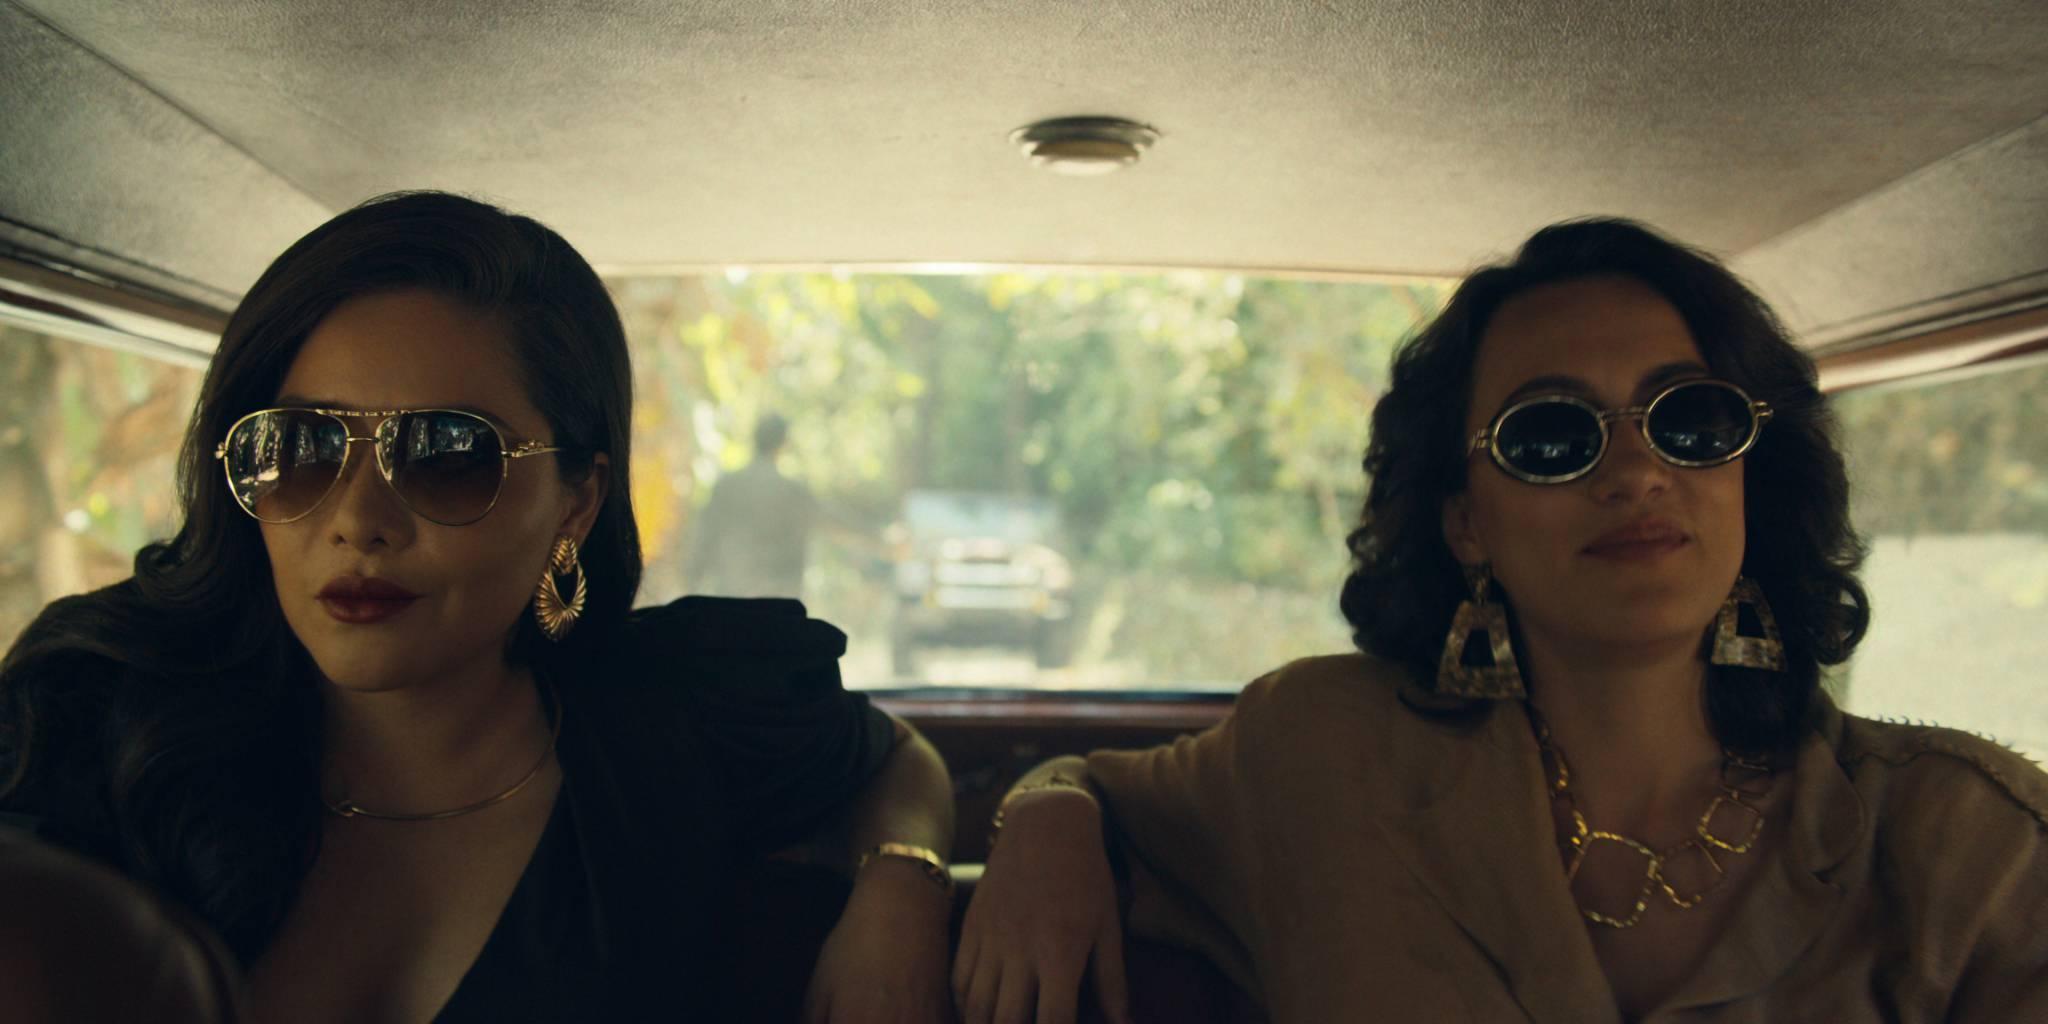  Kobieca twarz narkobiznesu, czyli Isabela Bautista (Teresa Ruiz) i Enedina Arellano (Mayra Hermosillo). (Fot. materiały prasowe)